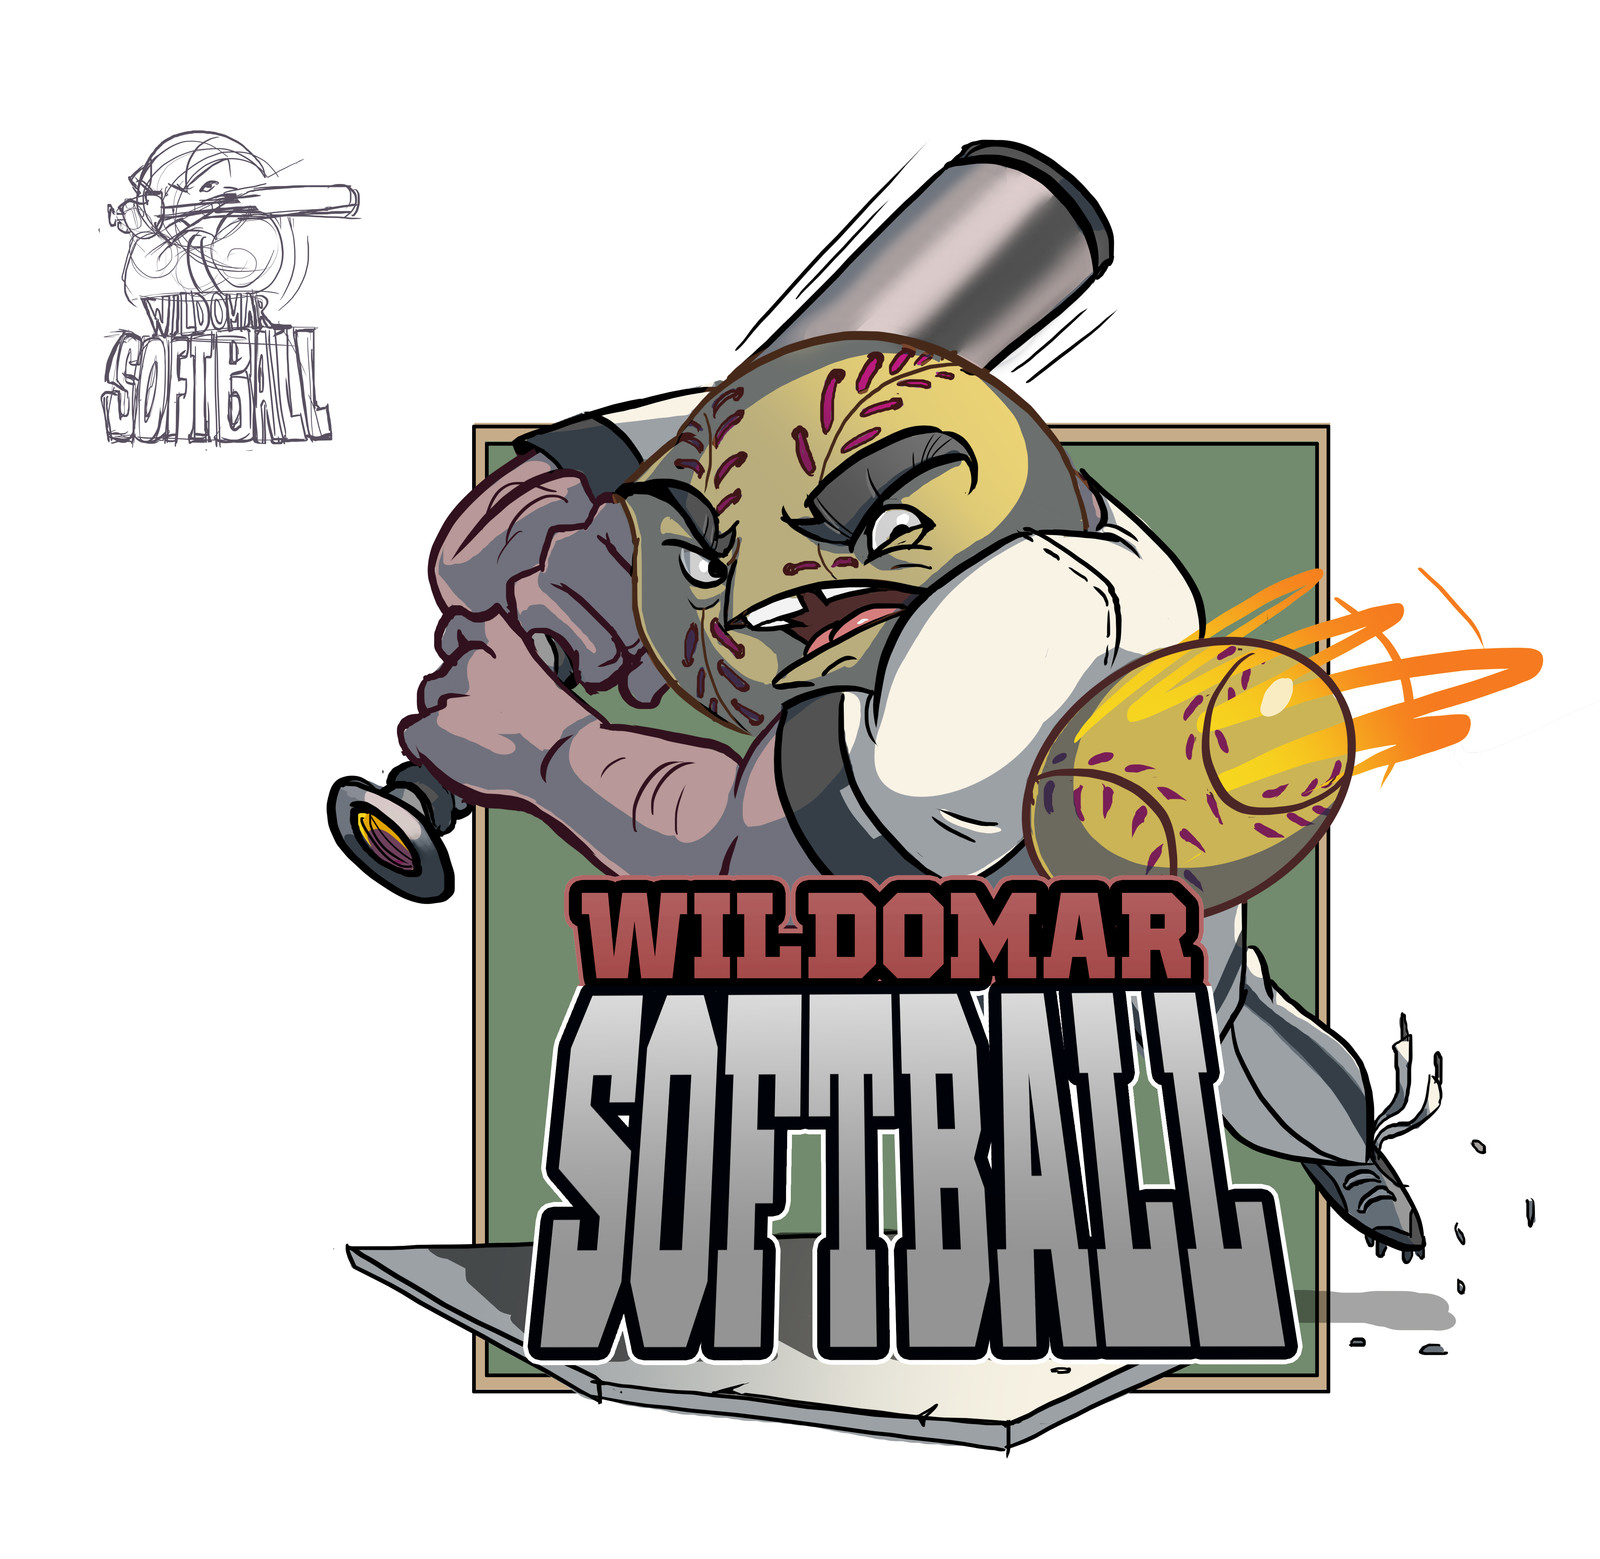 softball logo